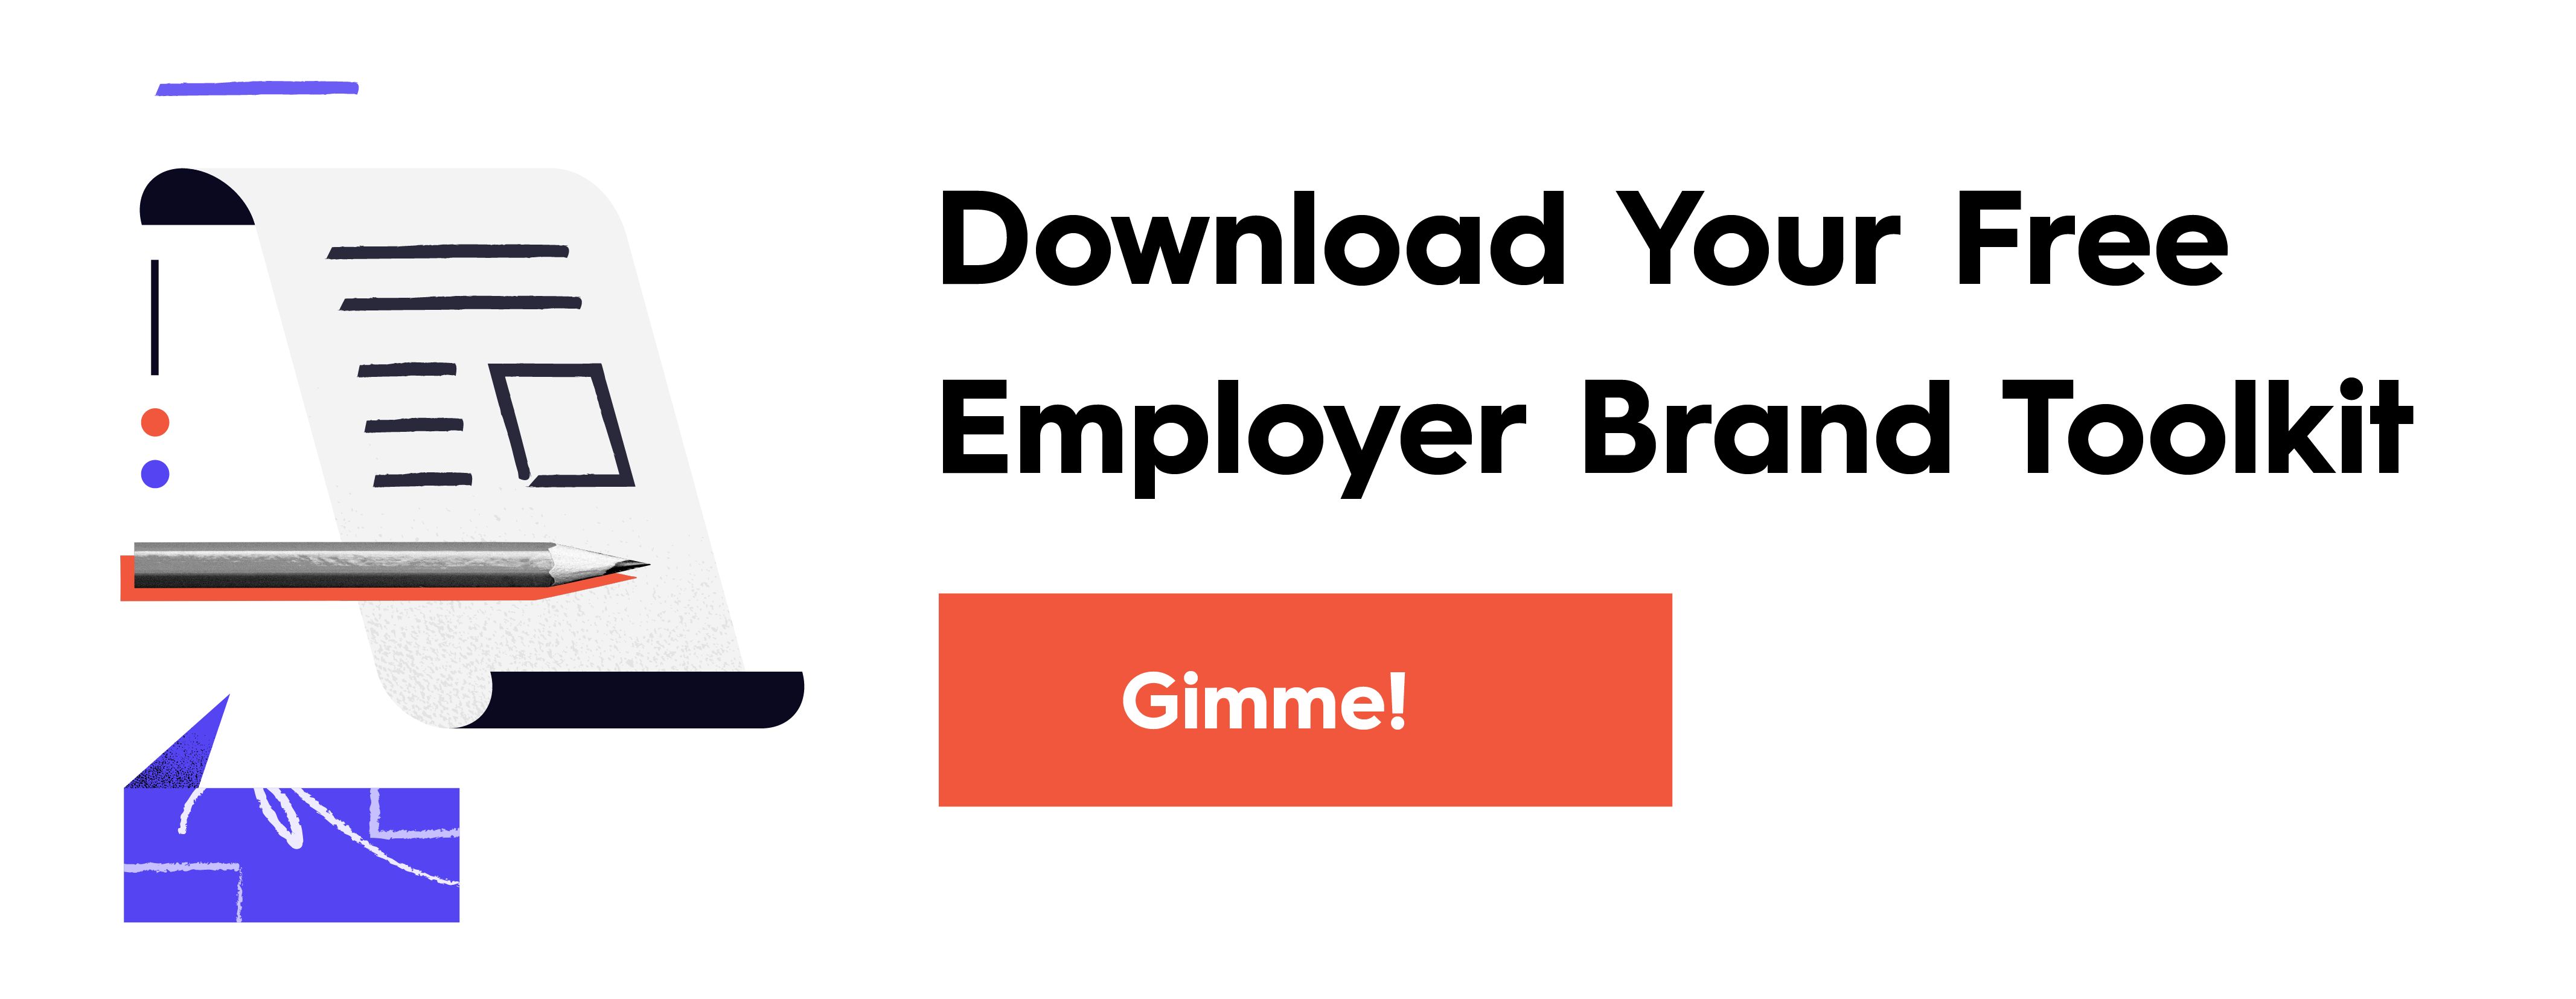 employer brand toolkit